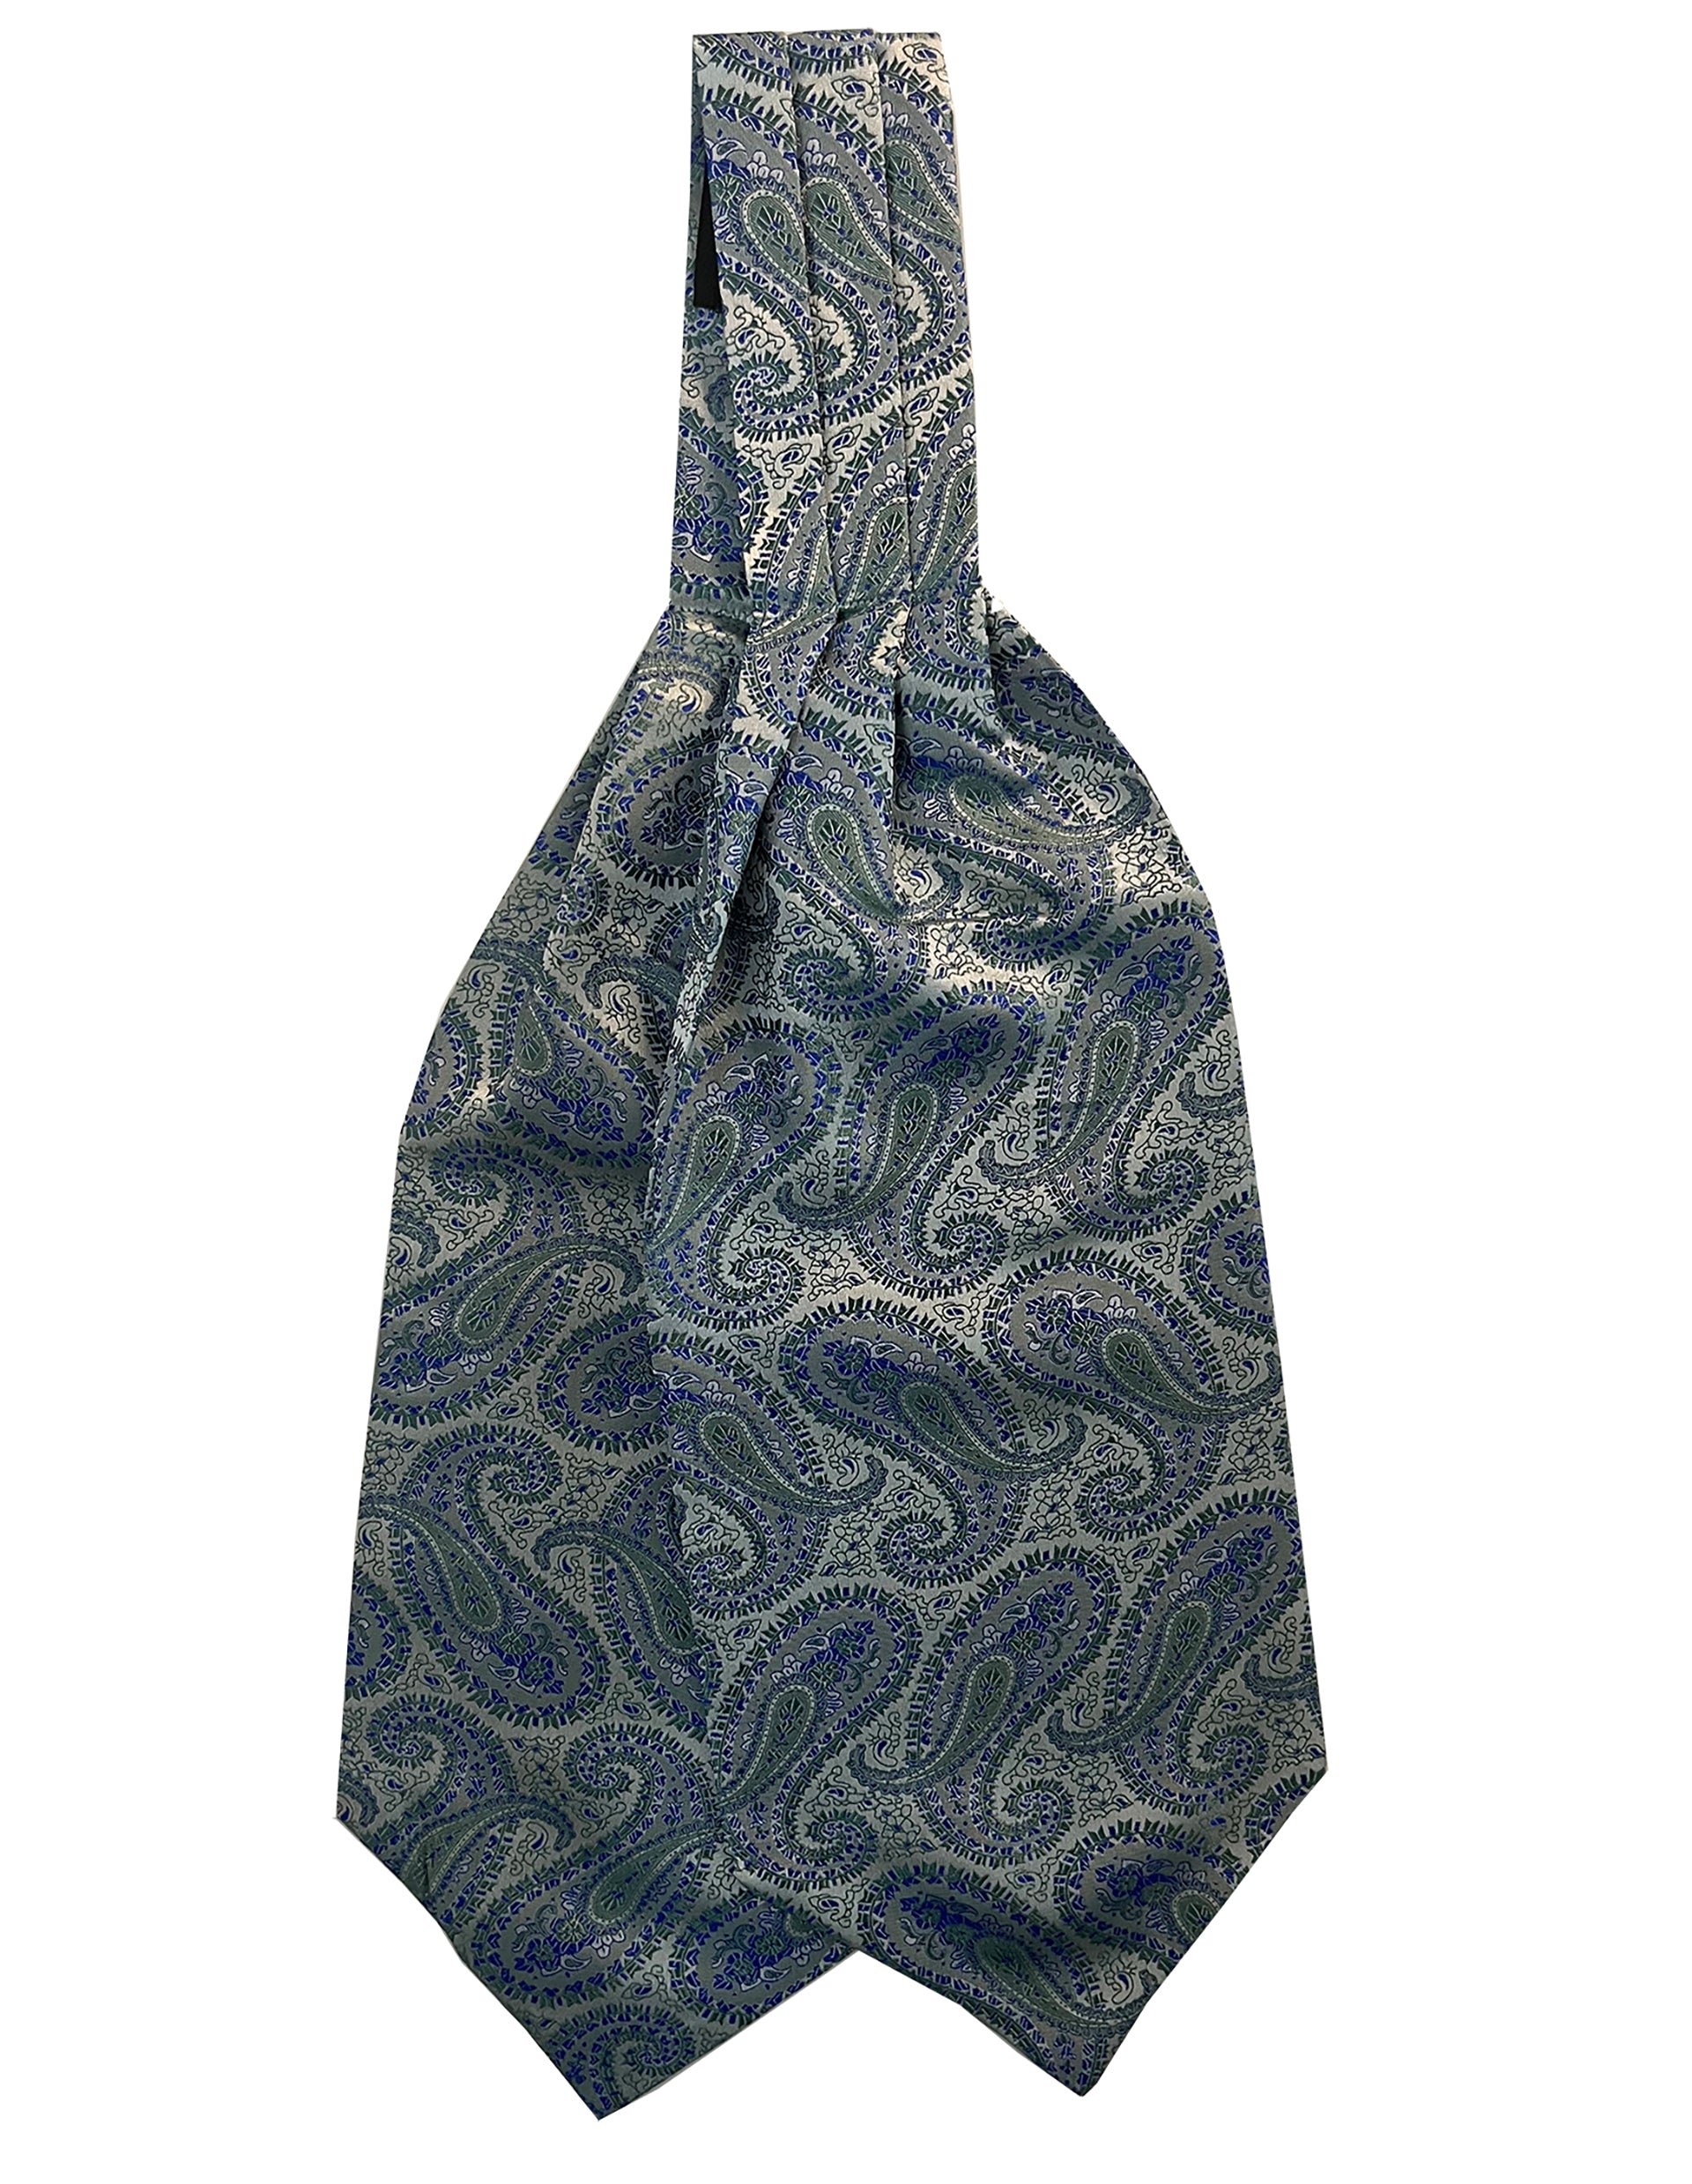 light blue cravat